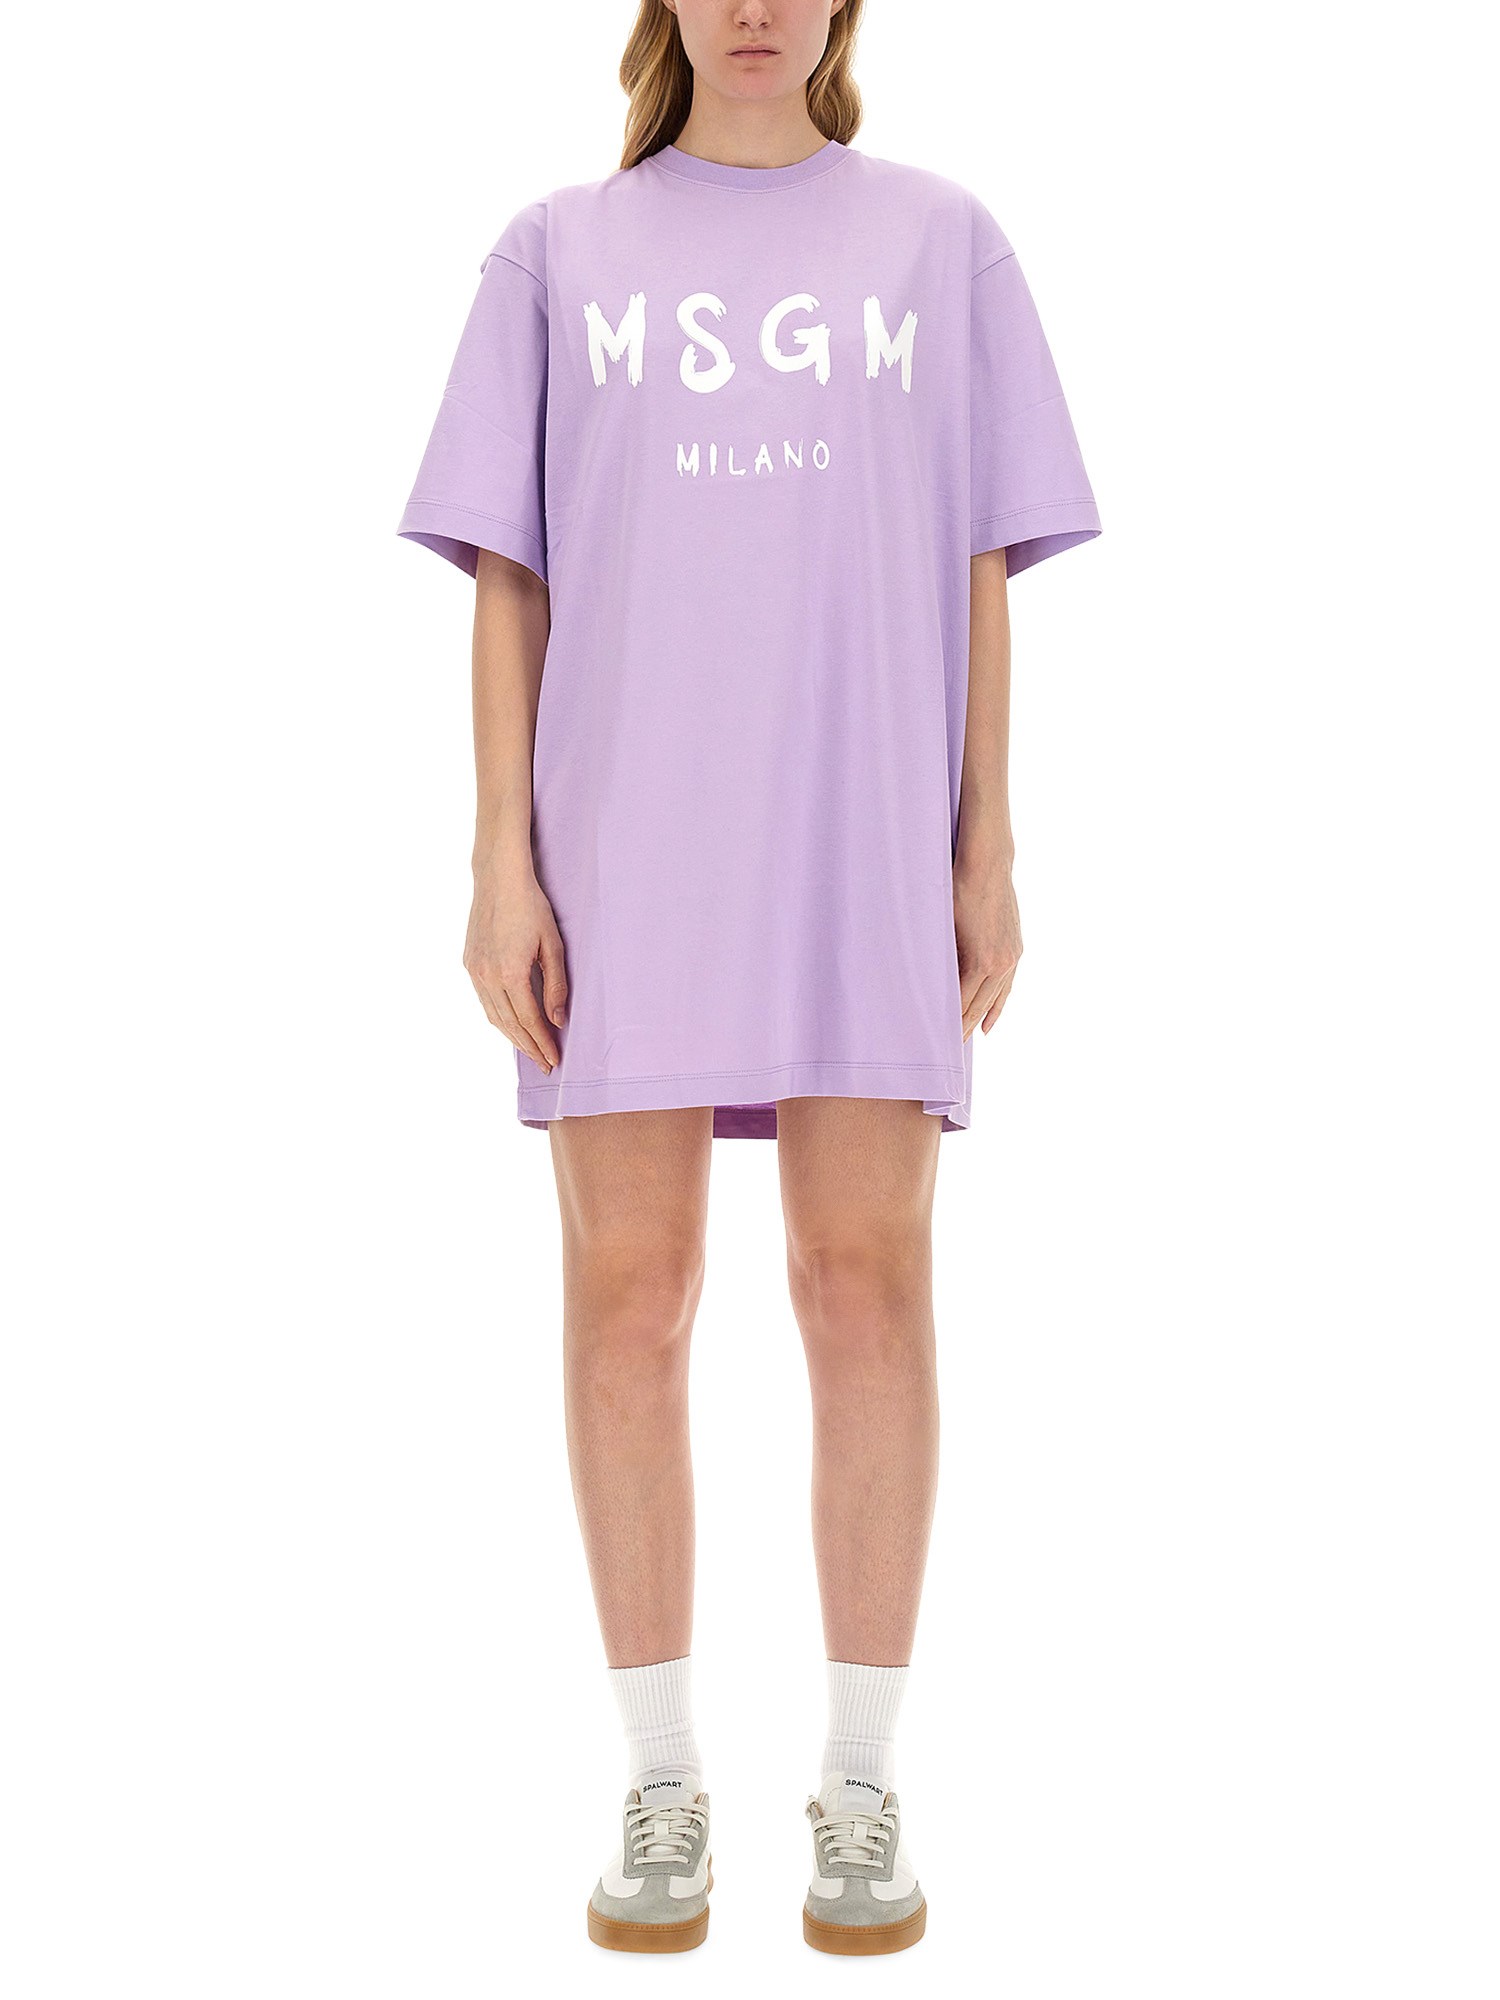 msgm t-shirt dress